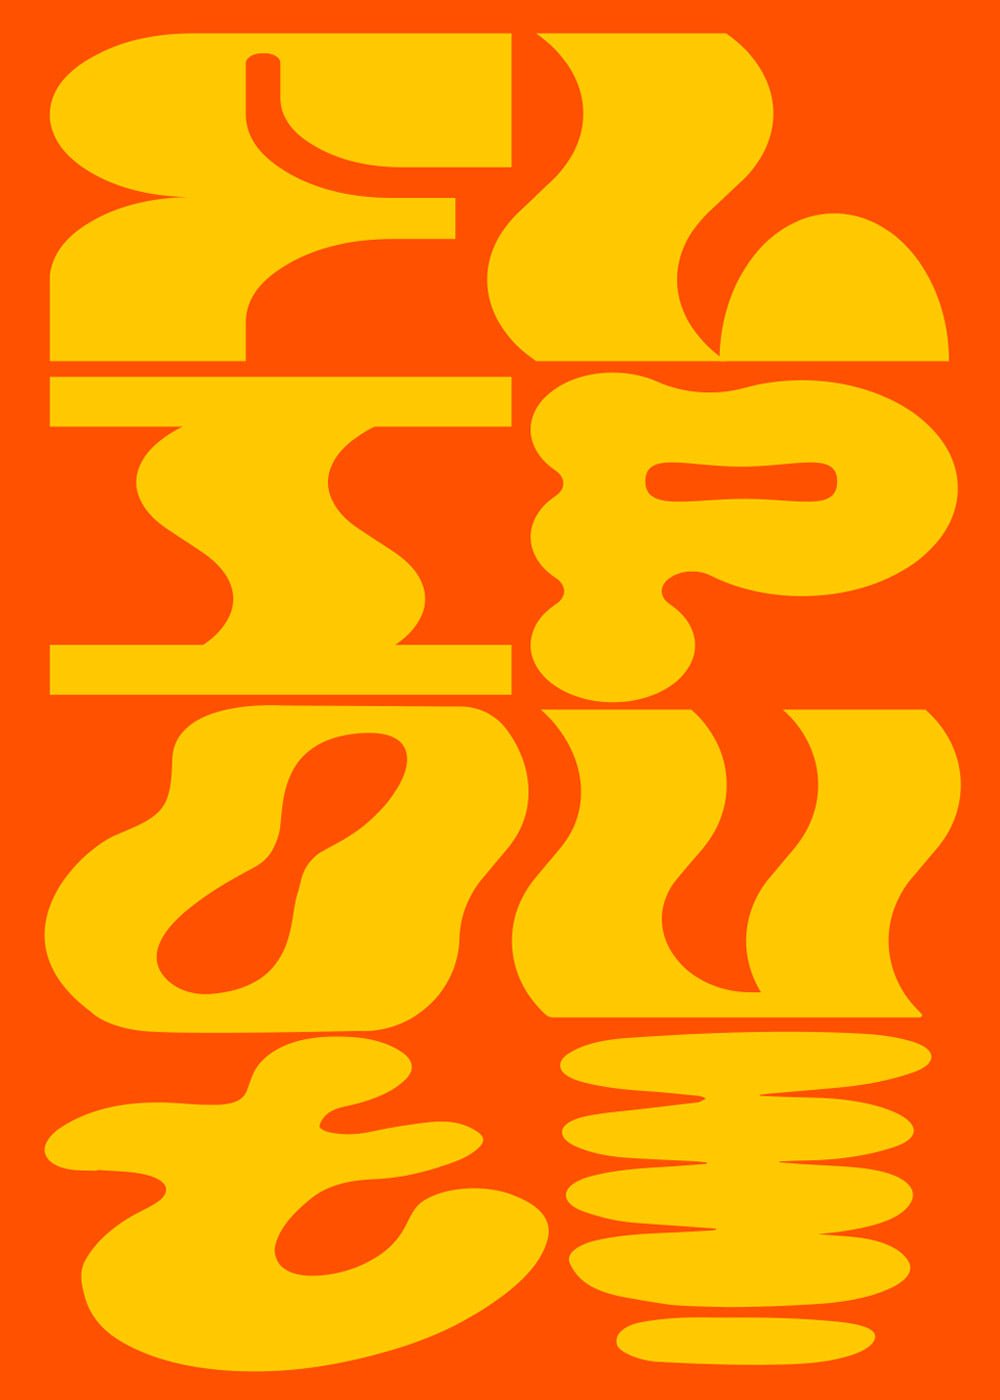 Flip Out Poster, typografisk poster i gult och orange. 